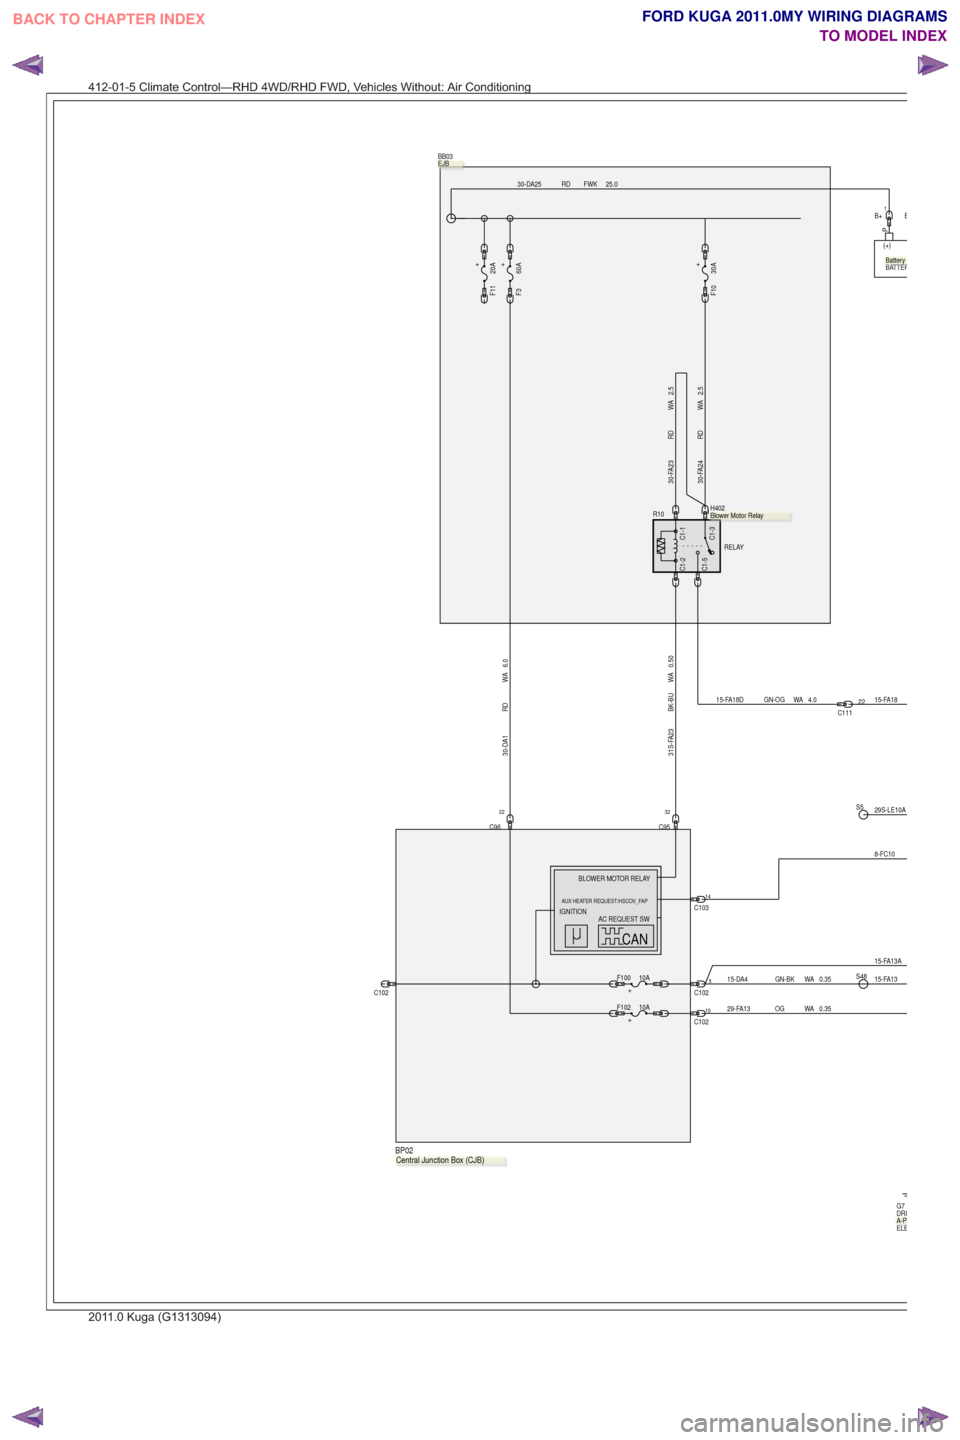 FORD KUGA 2011 1.G Wiring Diagram Workshop Manual 15-FA18
25.0
FWK
RD
30-DA25
5C102
P
(+)
BATTER
+F100 10A
0.50
WA
BK-BU
31S-FA23
C102
+
F11 20A
BB03
.
32
C95
0.35
WA
GN-BK
15-DA415-FA13S48
B+1
29S-LE10AS5
8-FC10
C10314
C1-5
C1-1C1-3
C1-2
R10
RELAY
H